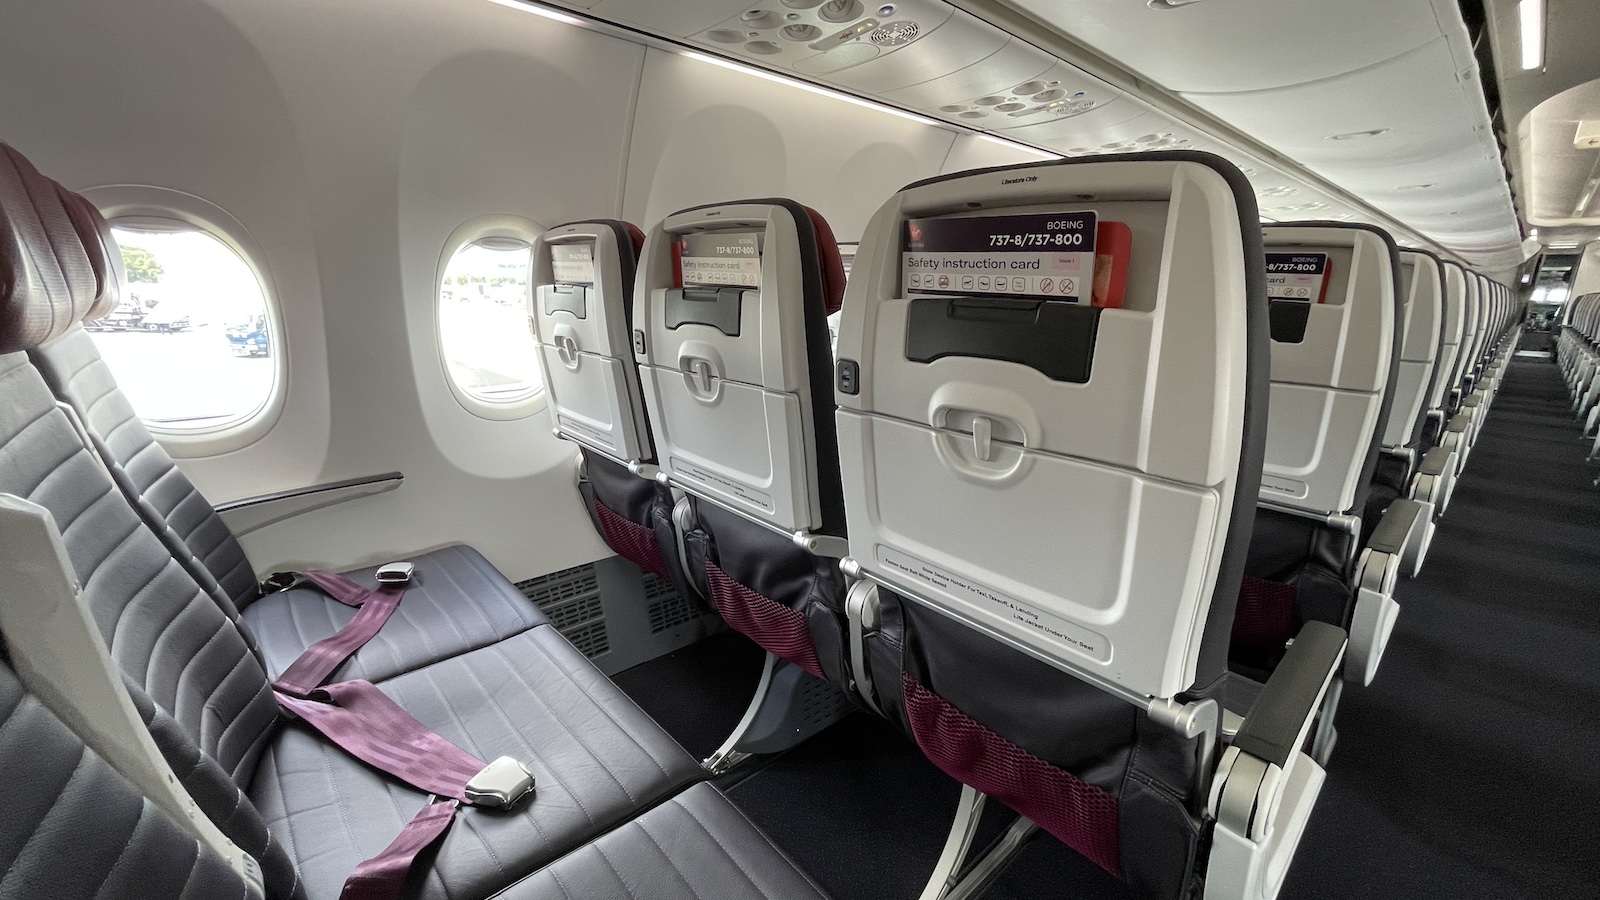 Virgin Australia Cairns Tokyo Haneda Economy Seat Pitch